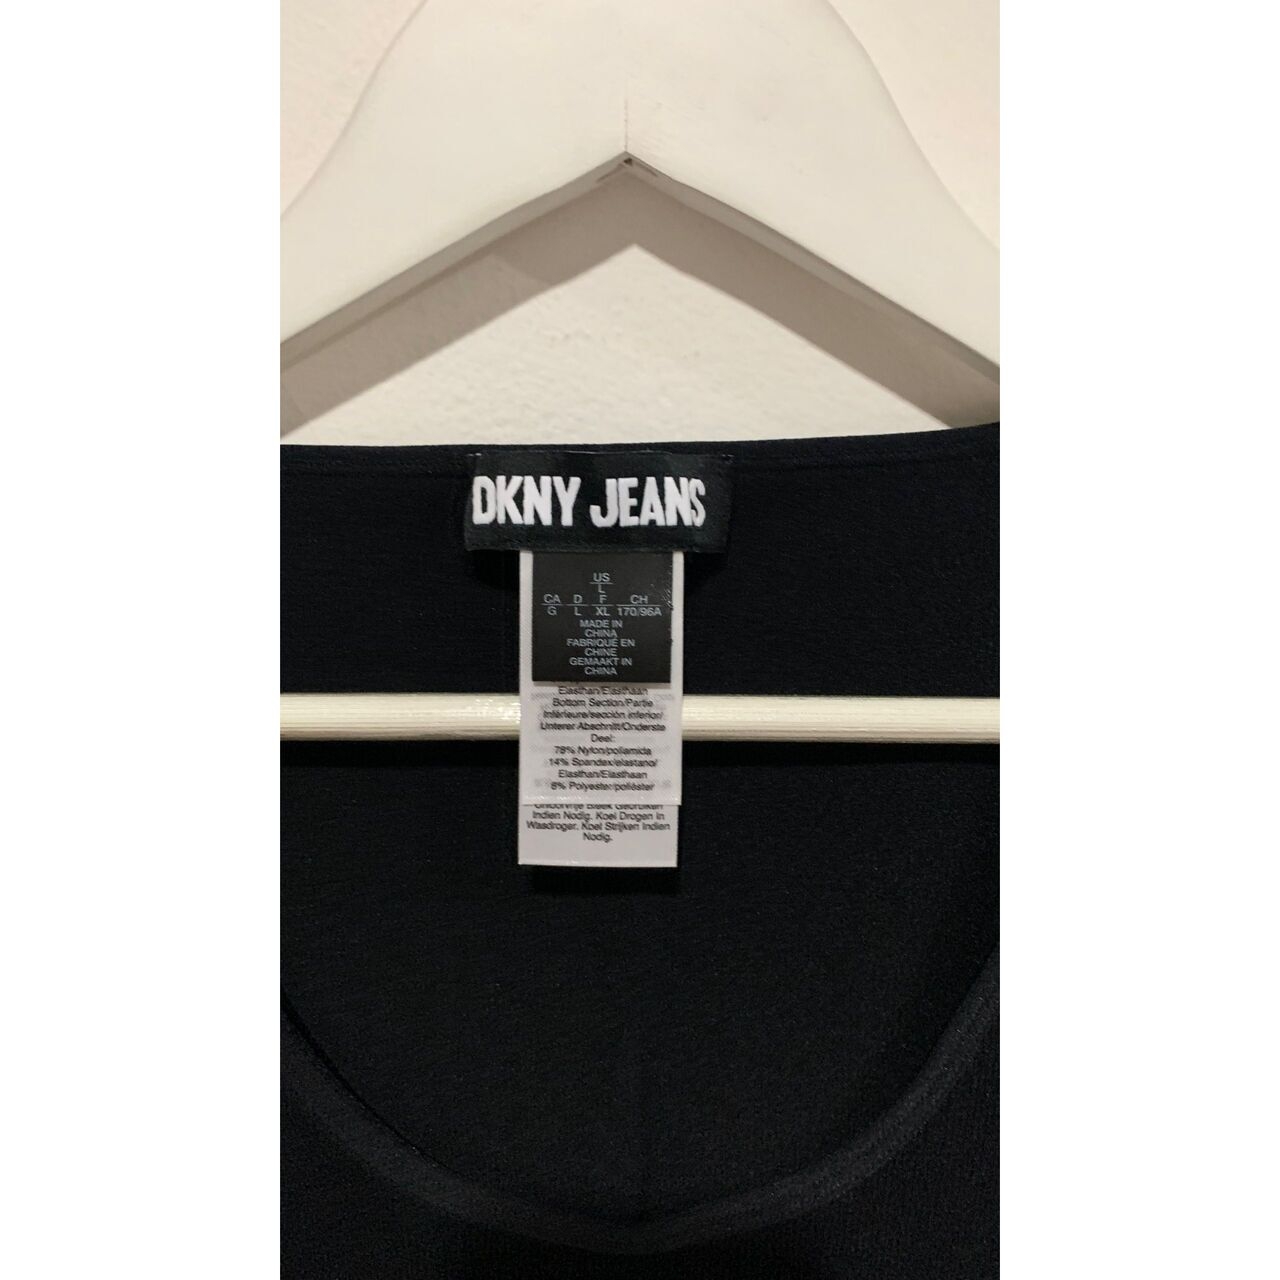 DKNY Jeans Black Blouse